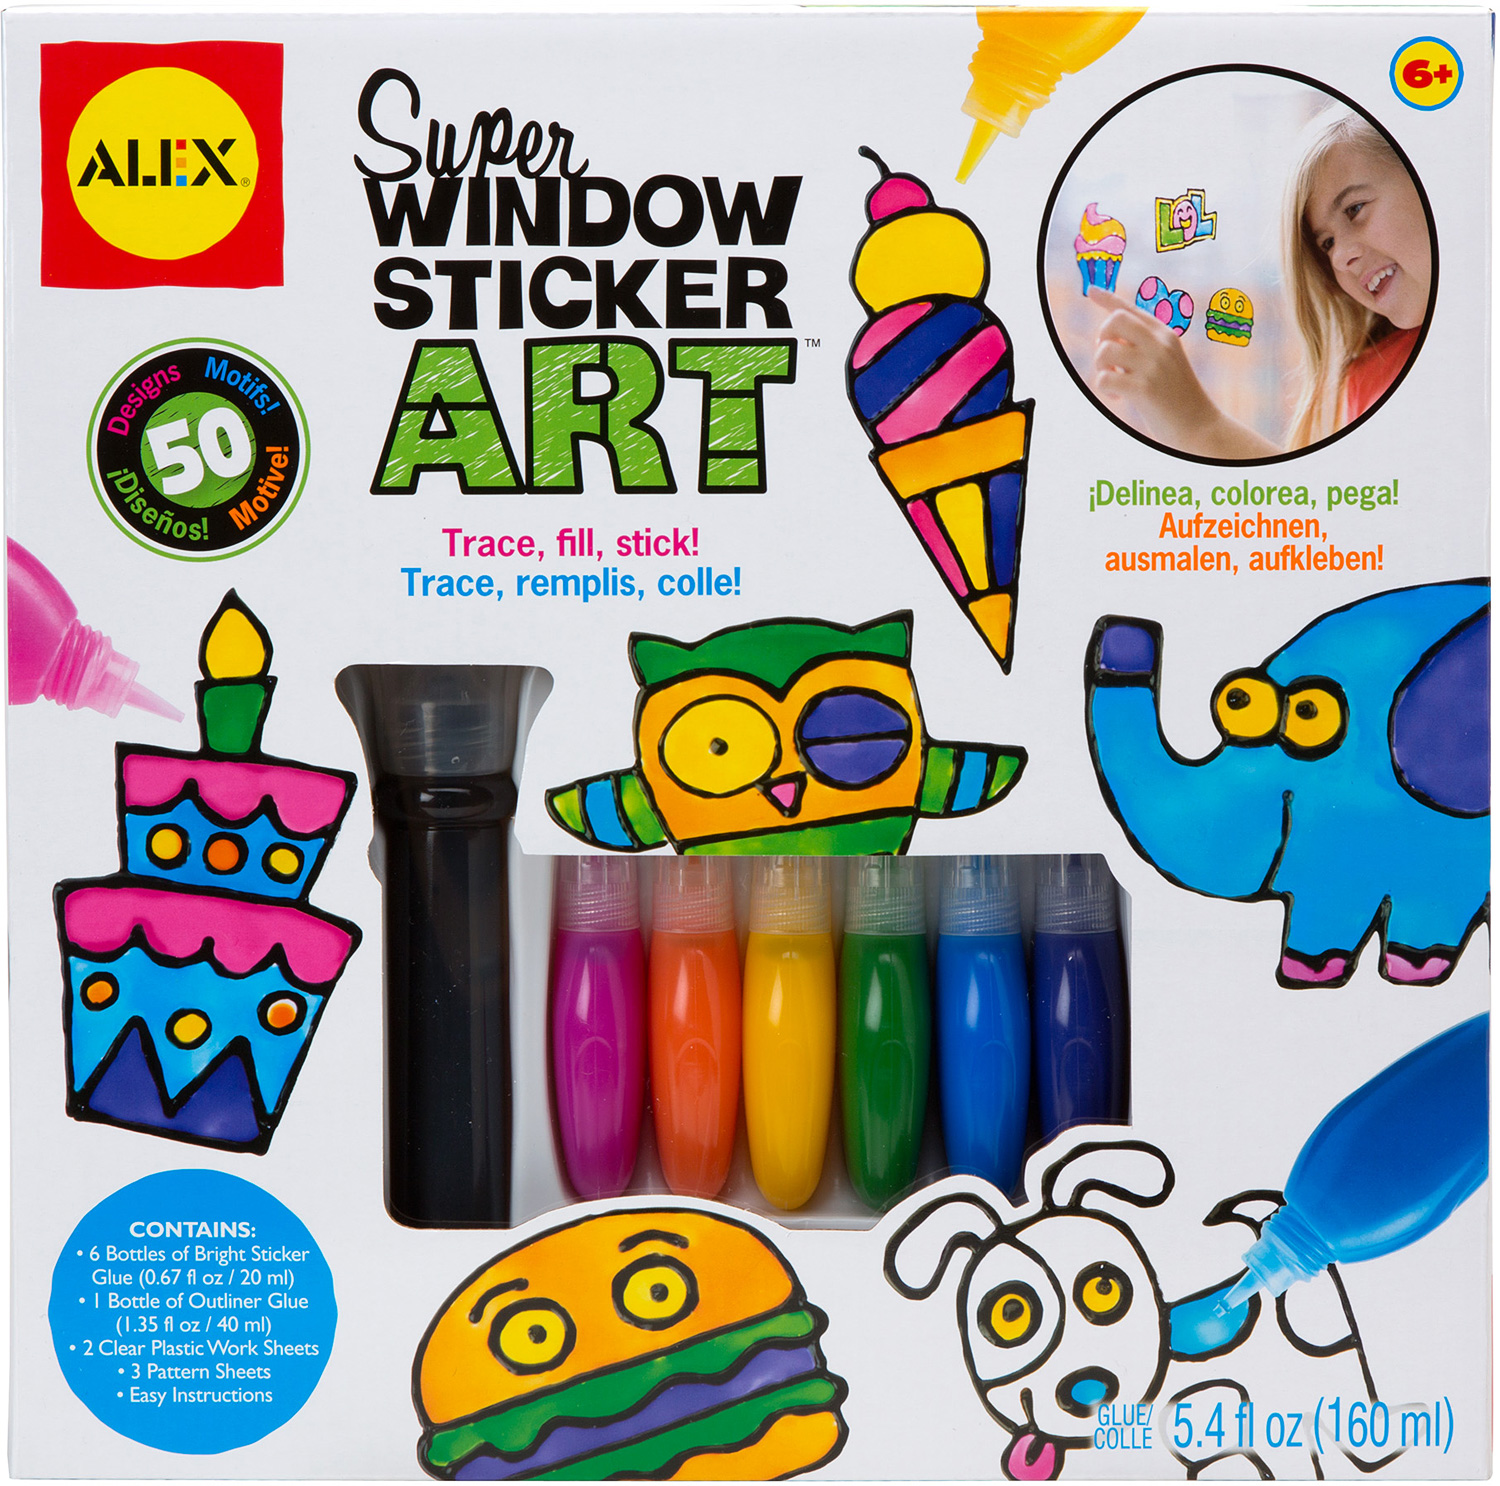 Alex Toys Sticker Factory Sticker Maker or Sticker Maker Refills from  $4.99–$15.99